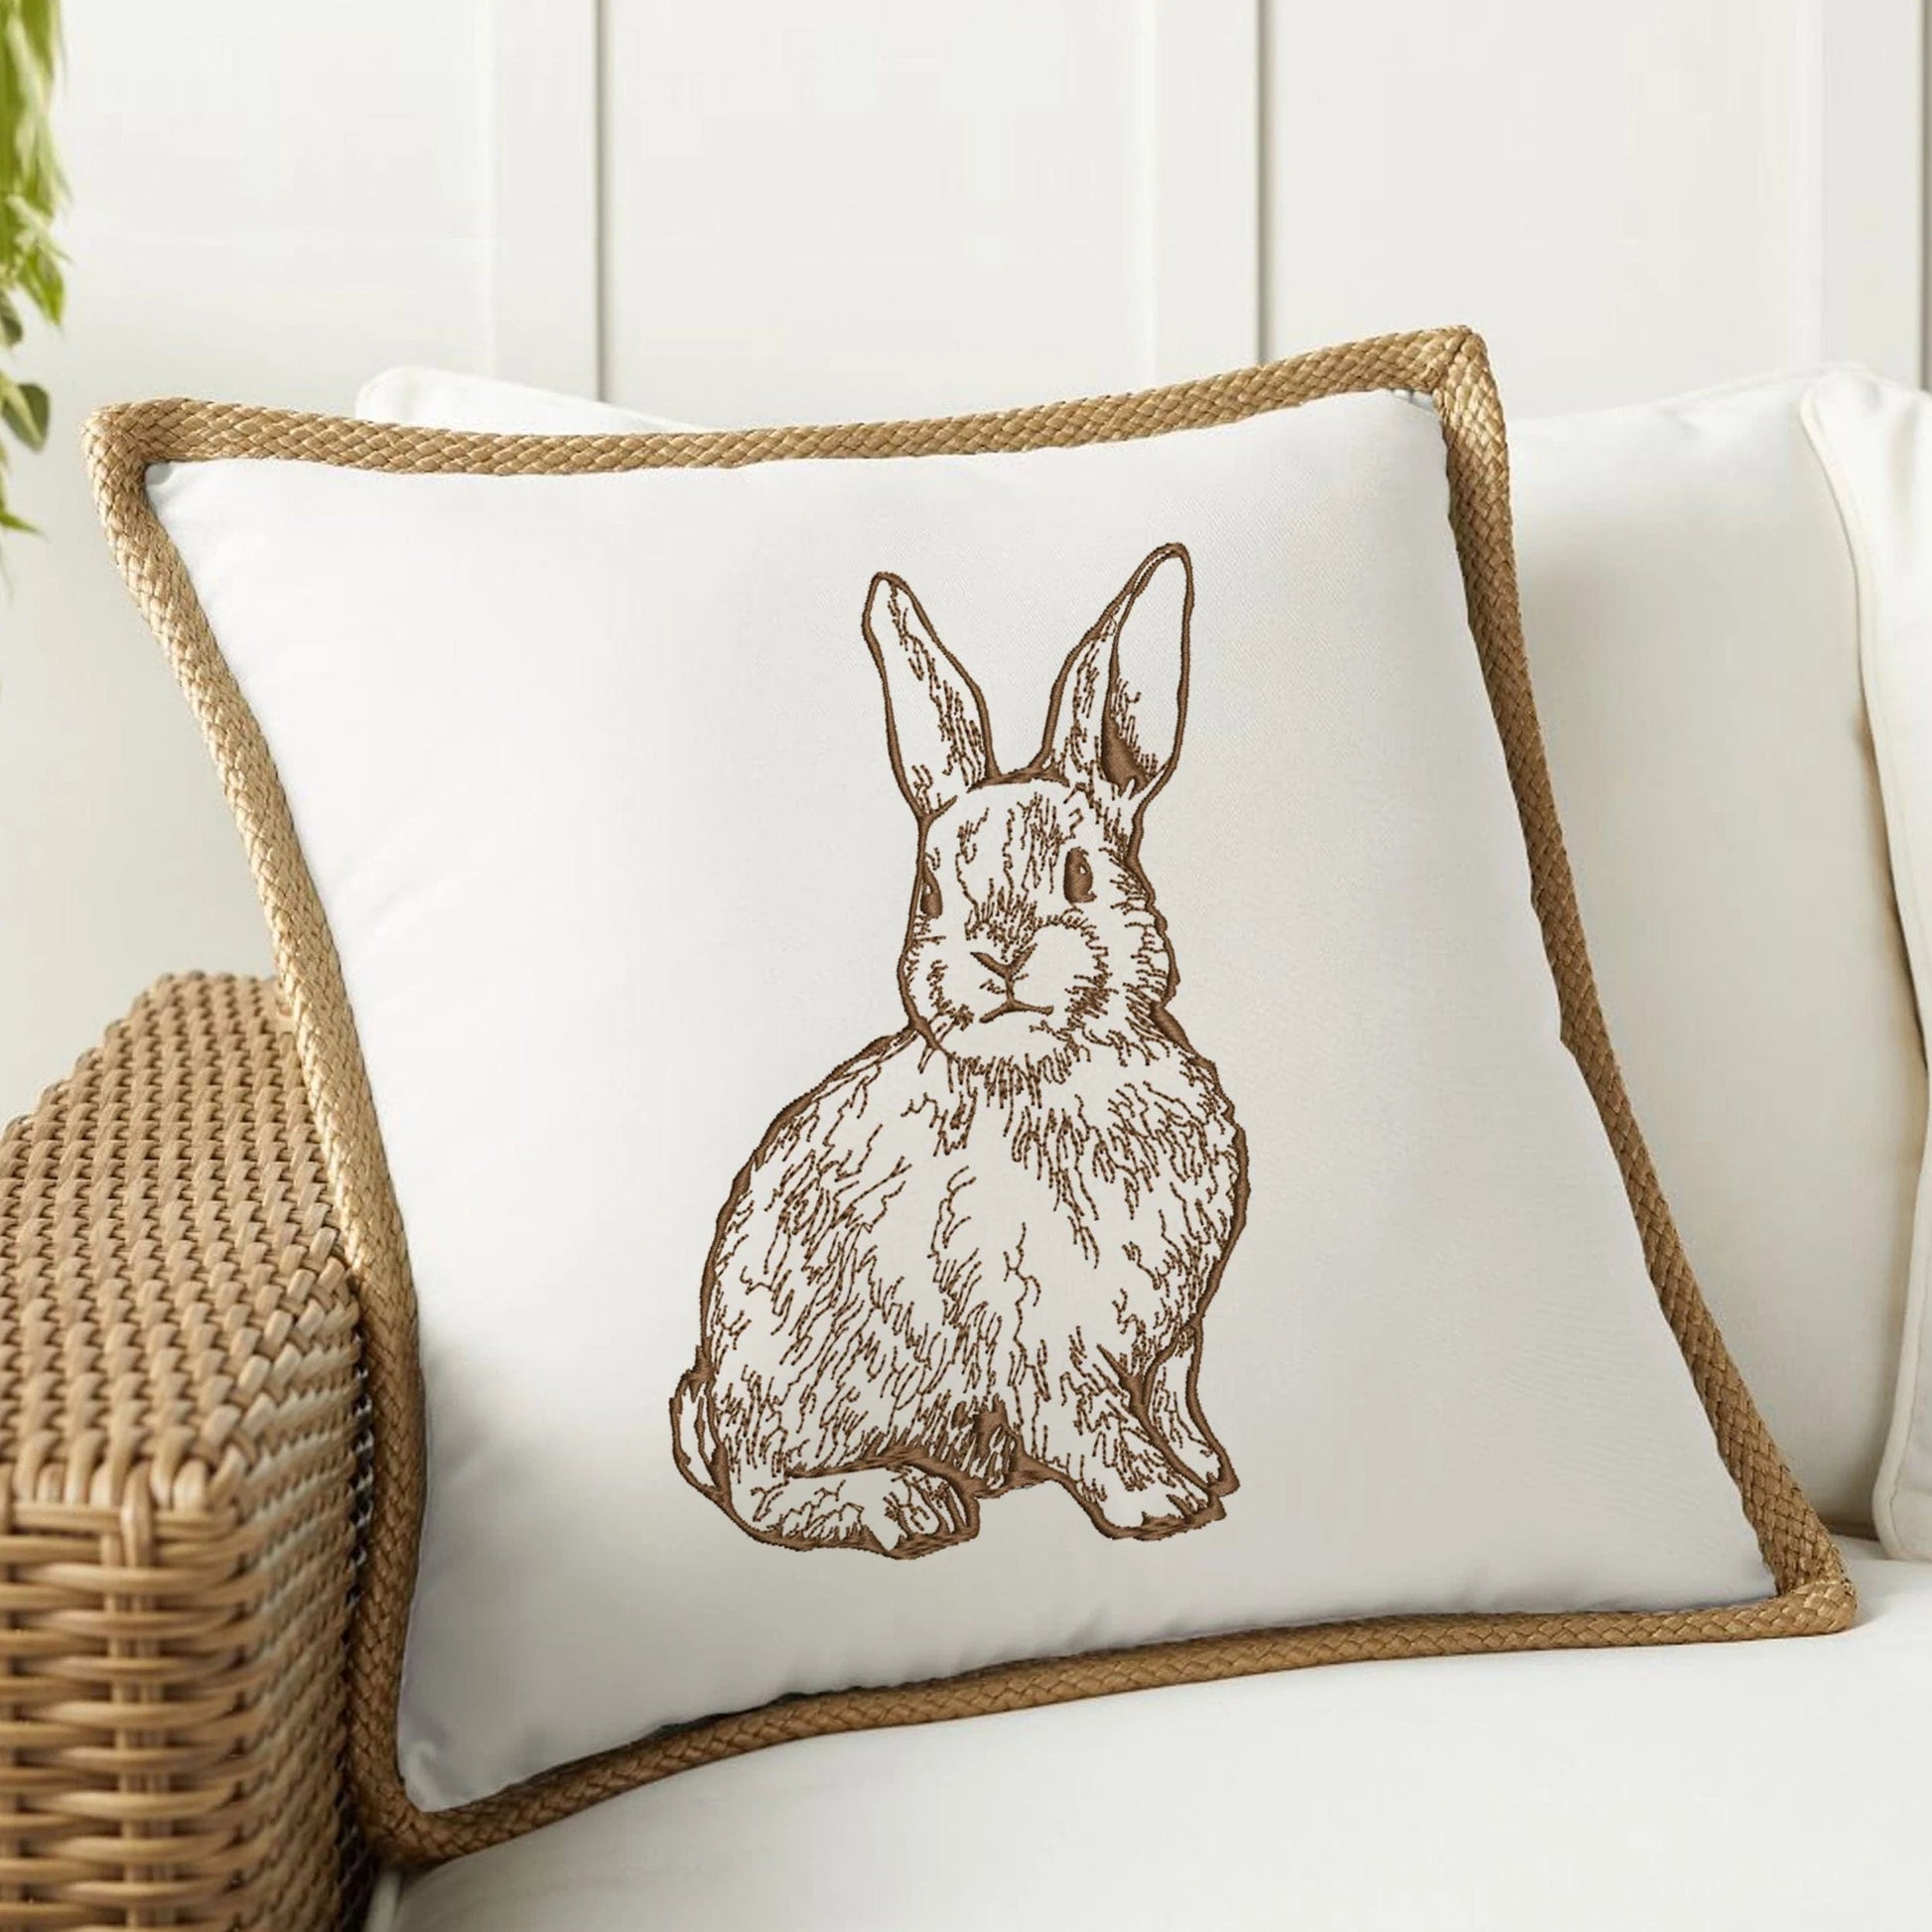 Rabbit Machine Embroidery Design on pillow